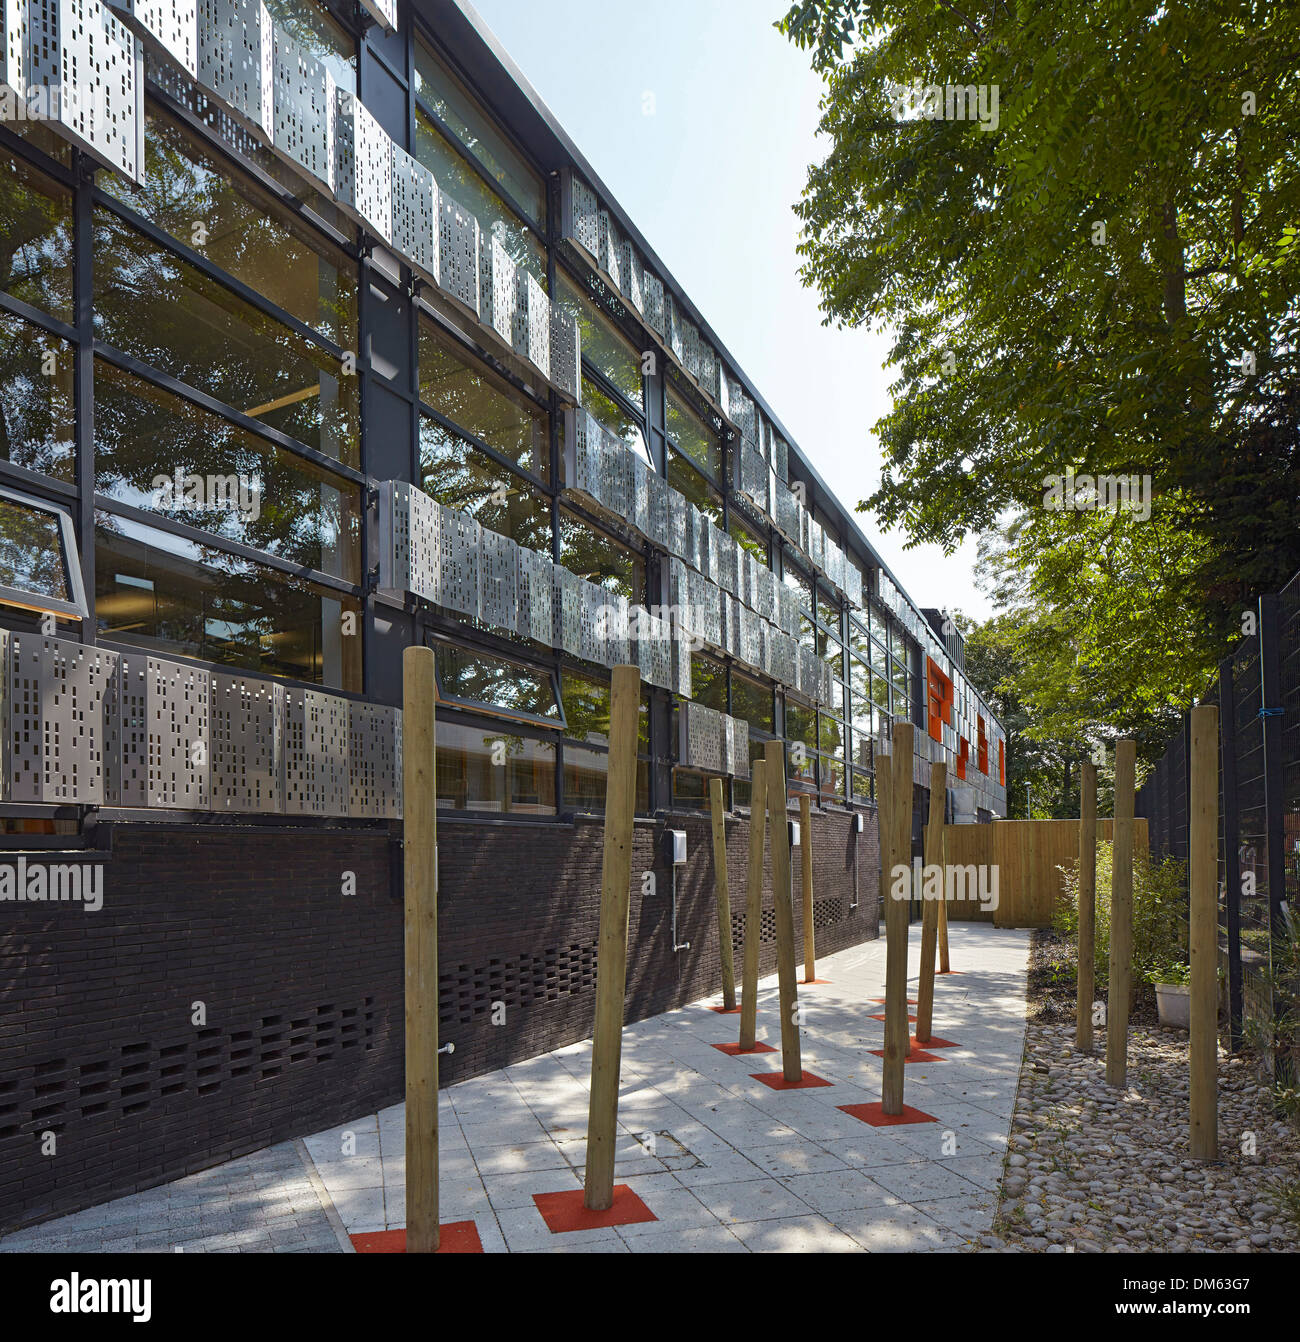 The Livity School, London, United Kingdom. Architect: Haverstock Associates LLP, 2013. Perspective of dark brick, stainless stee Stock Photo